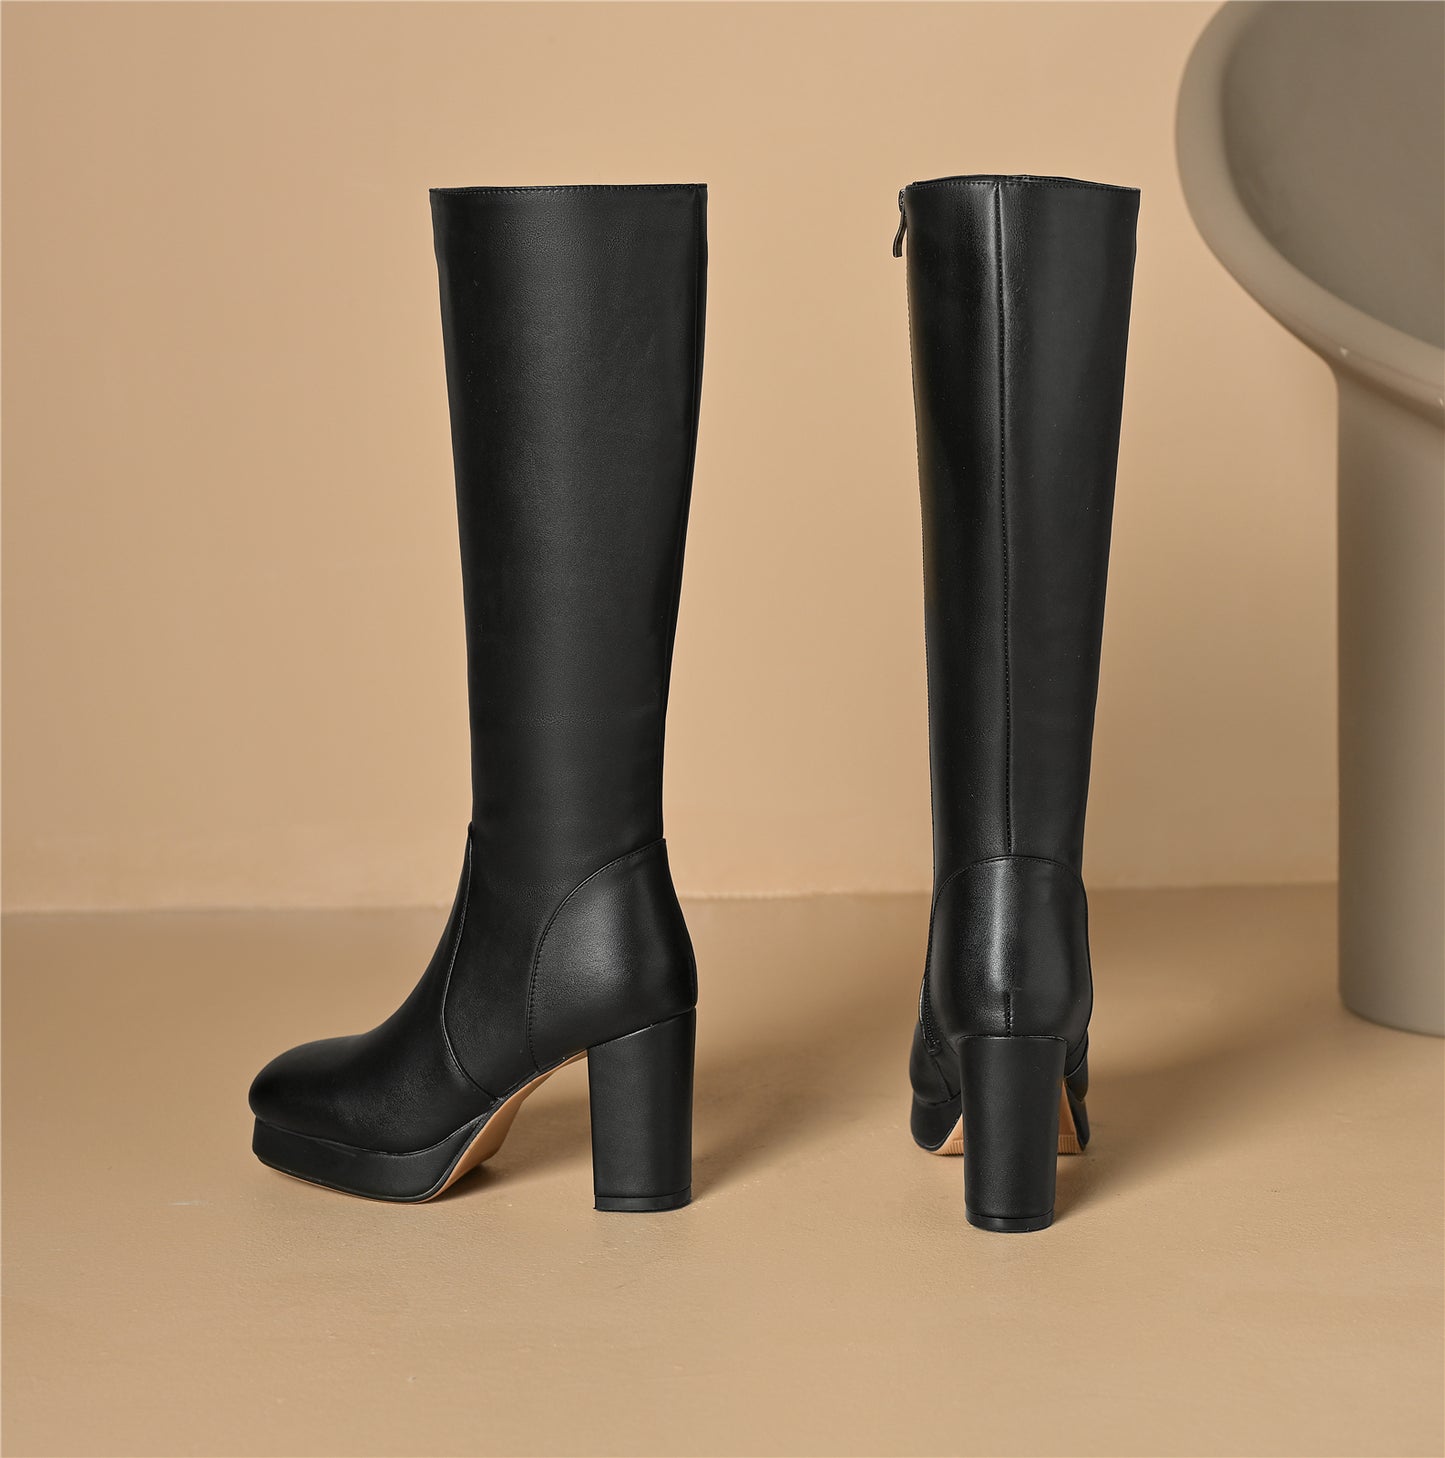 TinaCus Women's Square Toe Platform Genuine Leather Handmade Side Zip High Heels Knee High Boots